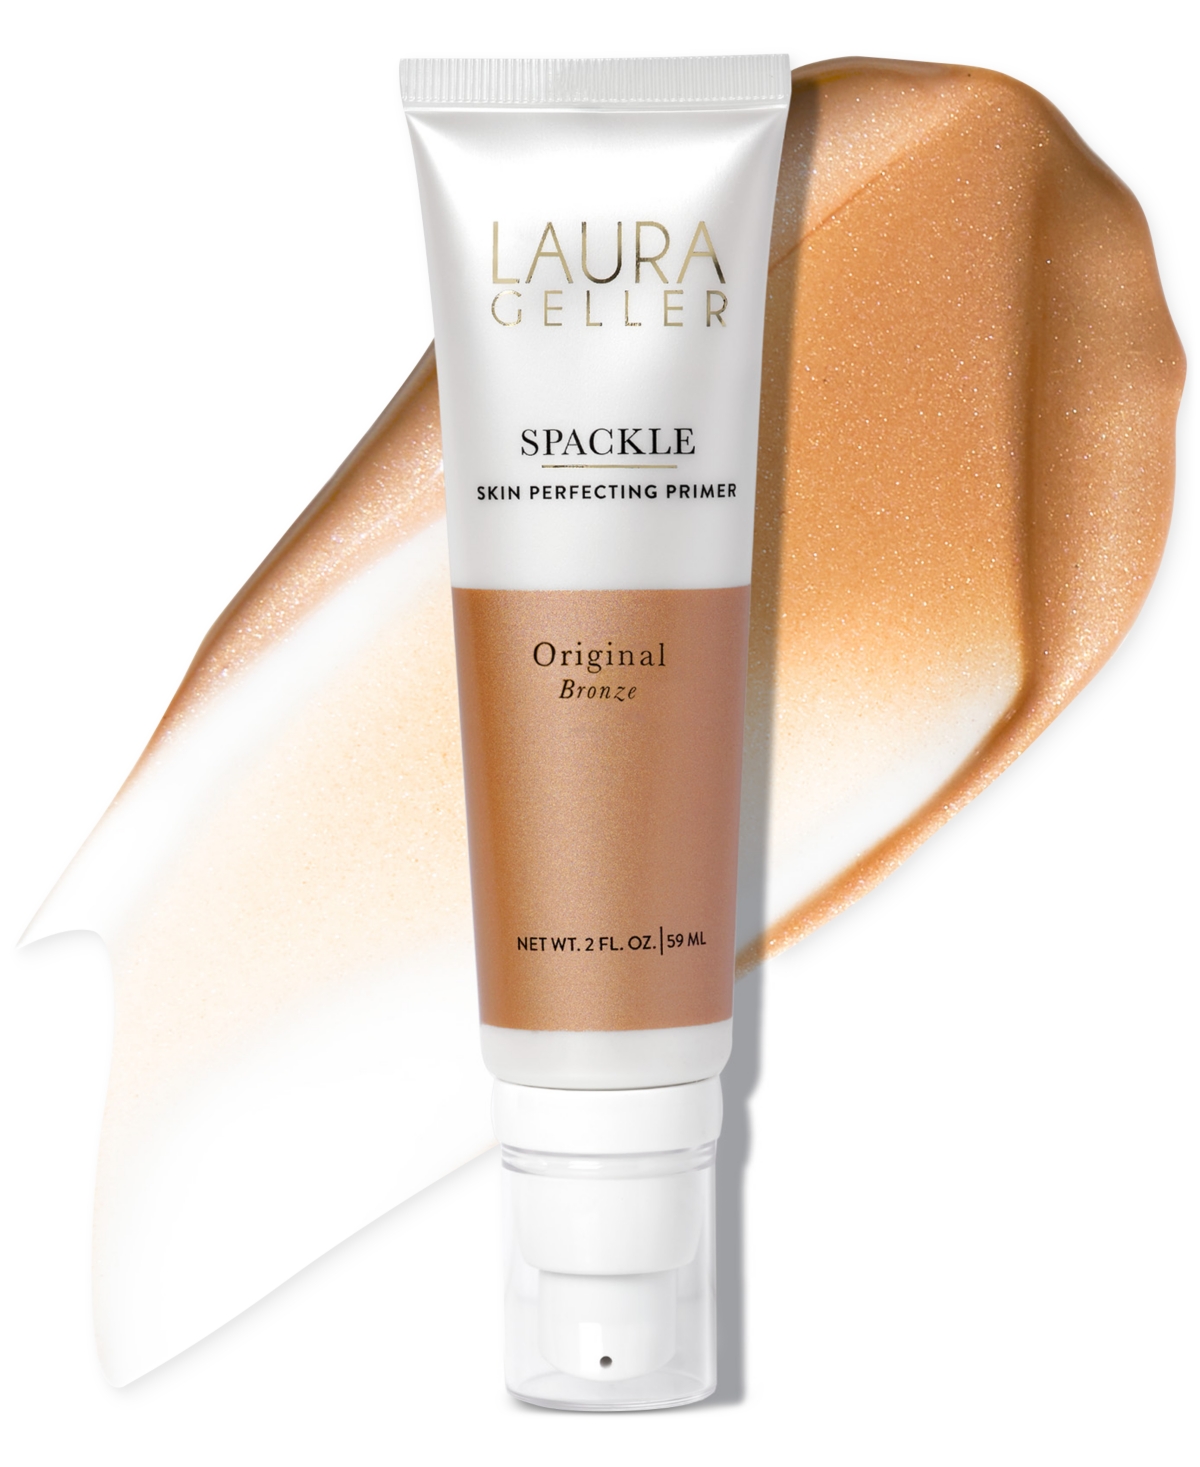 Laura Geller Beauty Spackle Skin Perfecting Primer - Original Bronze